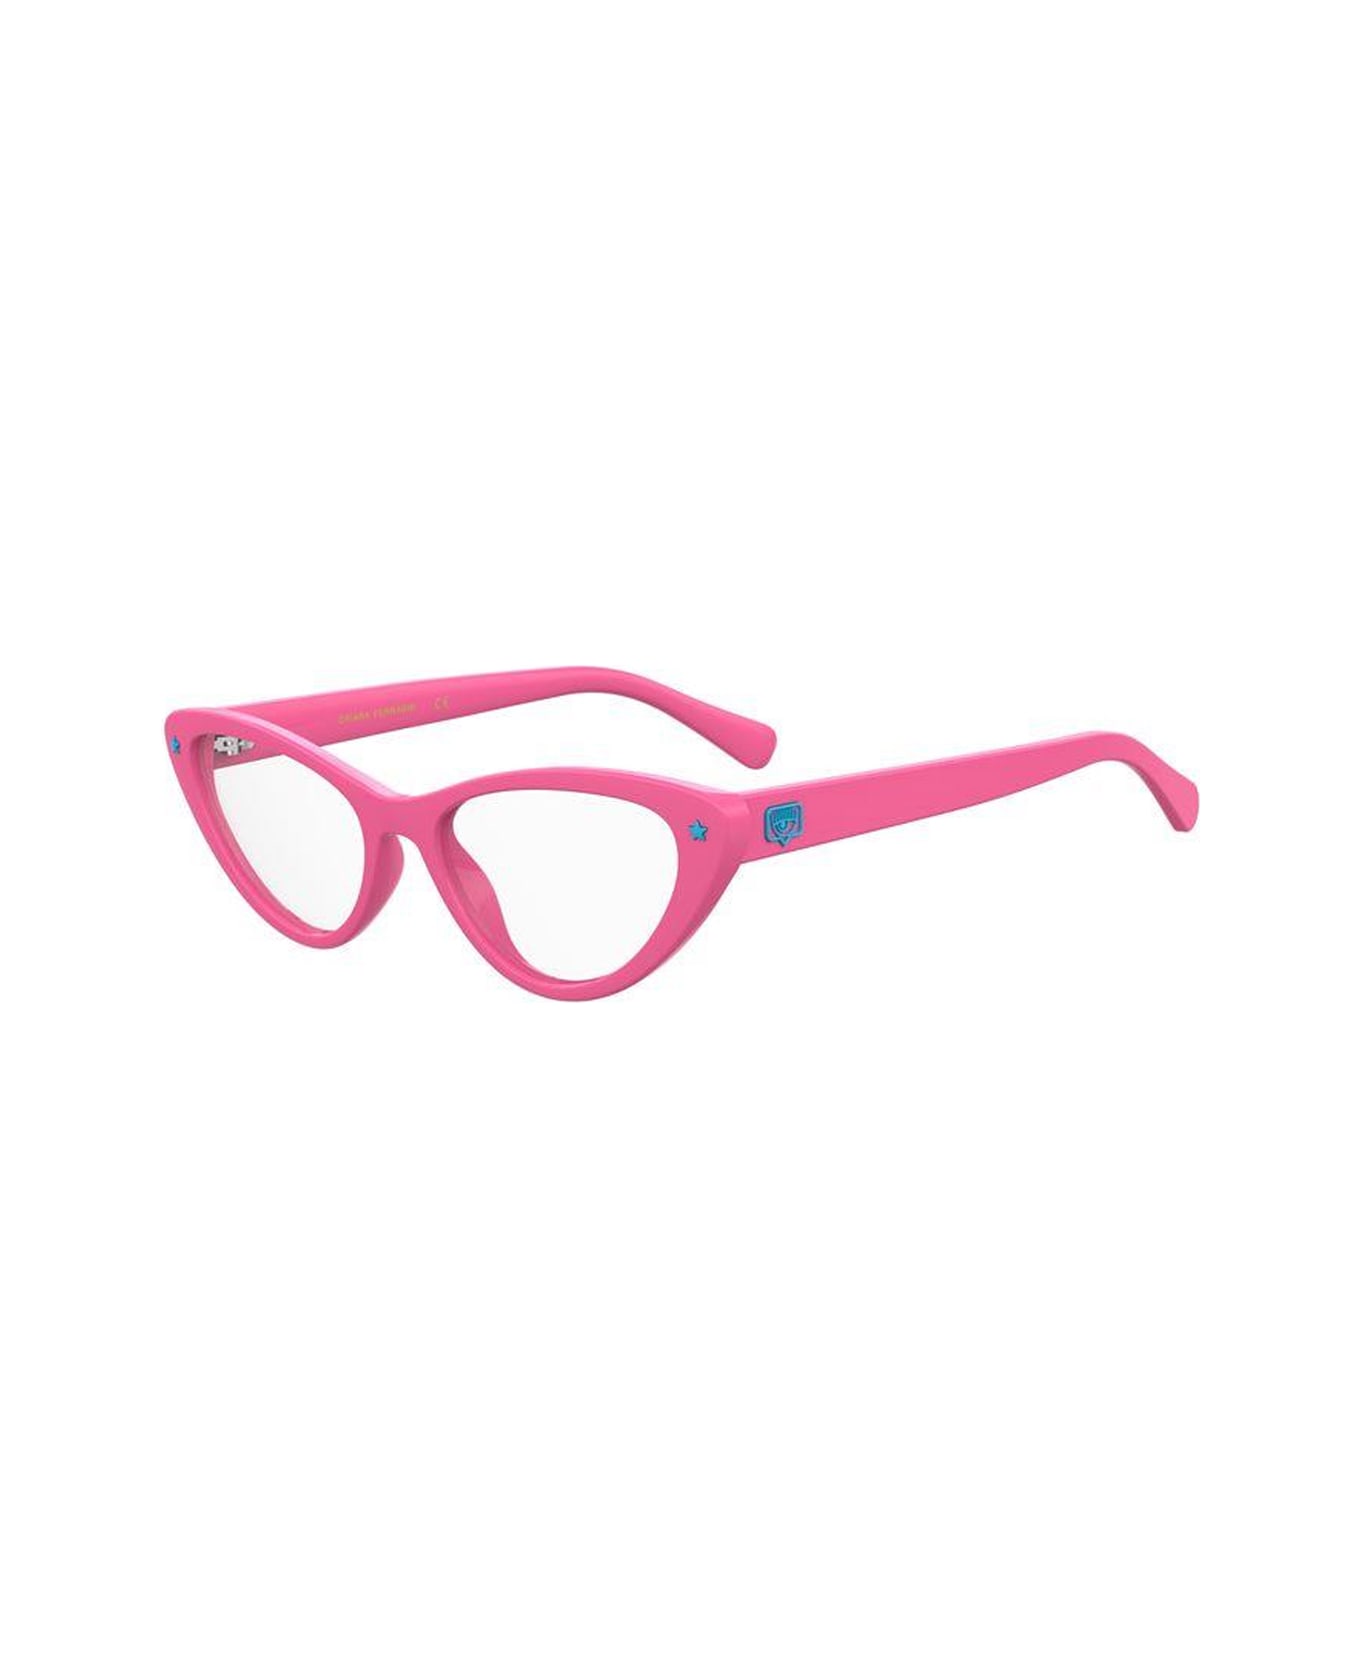 Chiara Ferragni Cf 7012 Pink Glasses - Rosa アイウェア